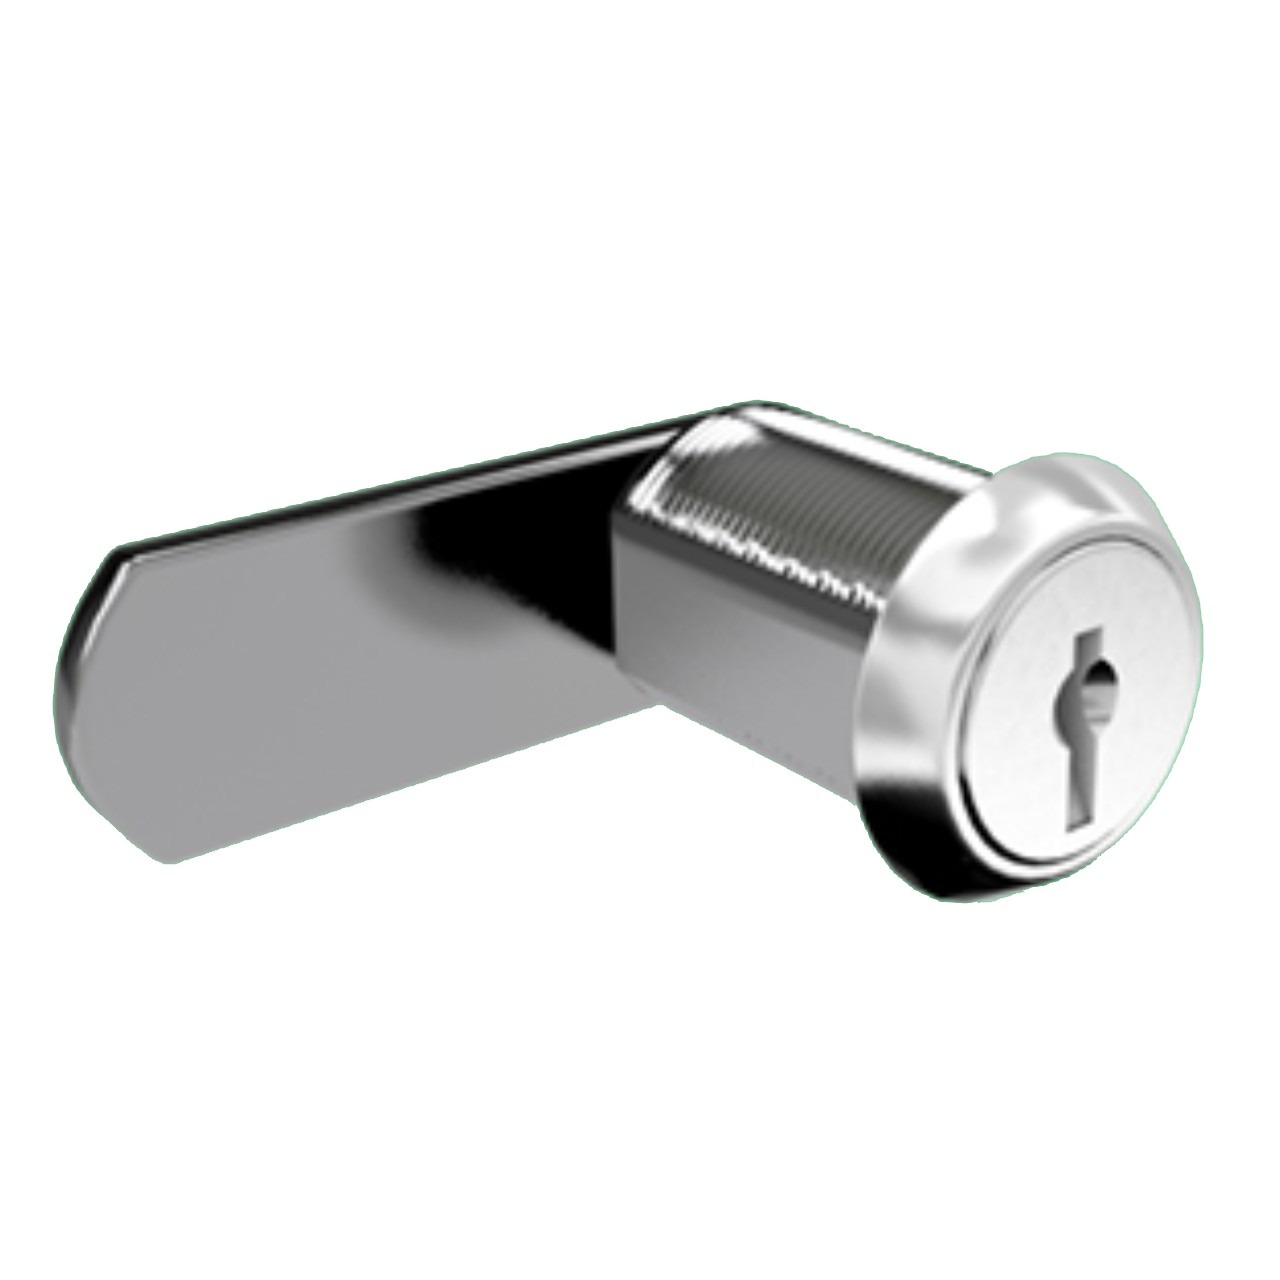 Pure Standard CAM Lock Inc. 2 Keys